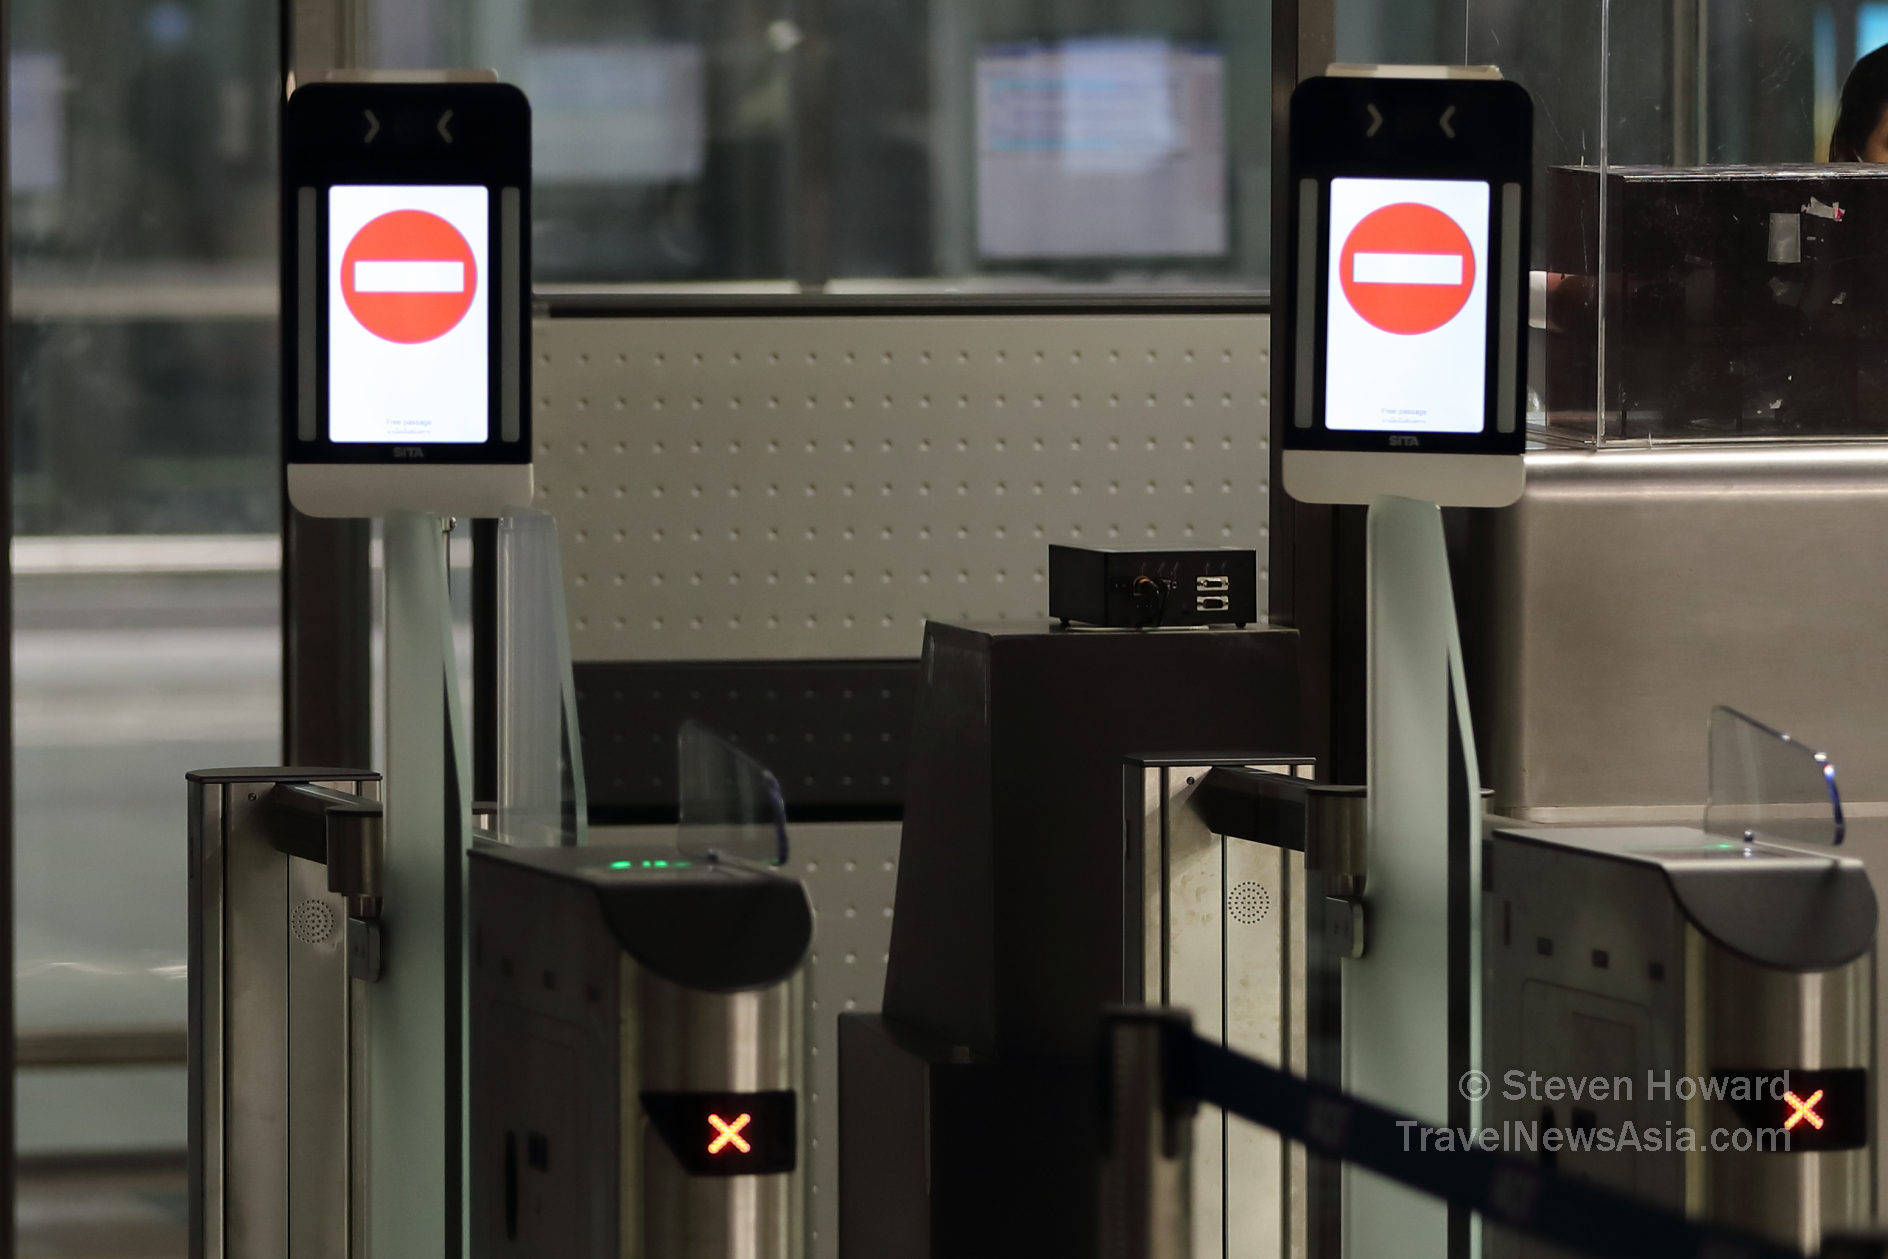 SITA Biometric Boarding Gates at Suvarnabhumi Airport (BKK) near Bangkok, Thailand. Picture by Steven Howard of TravelNewsAsia.com Click to enlarge.